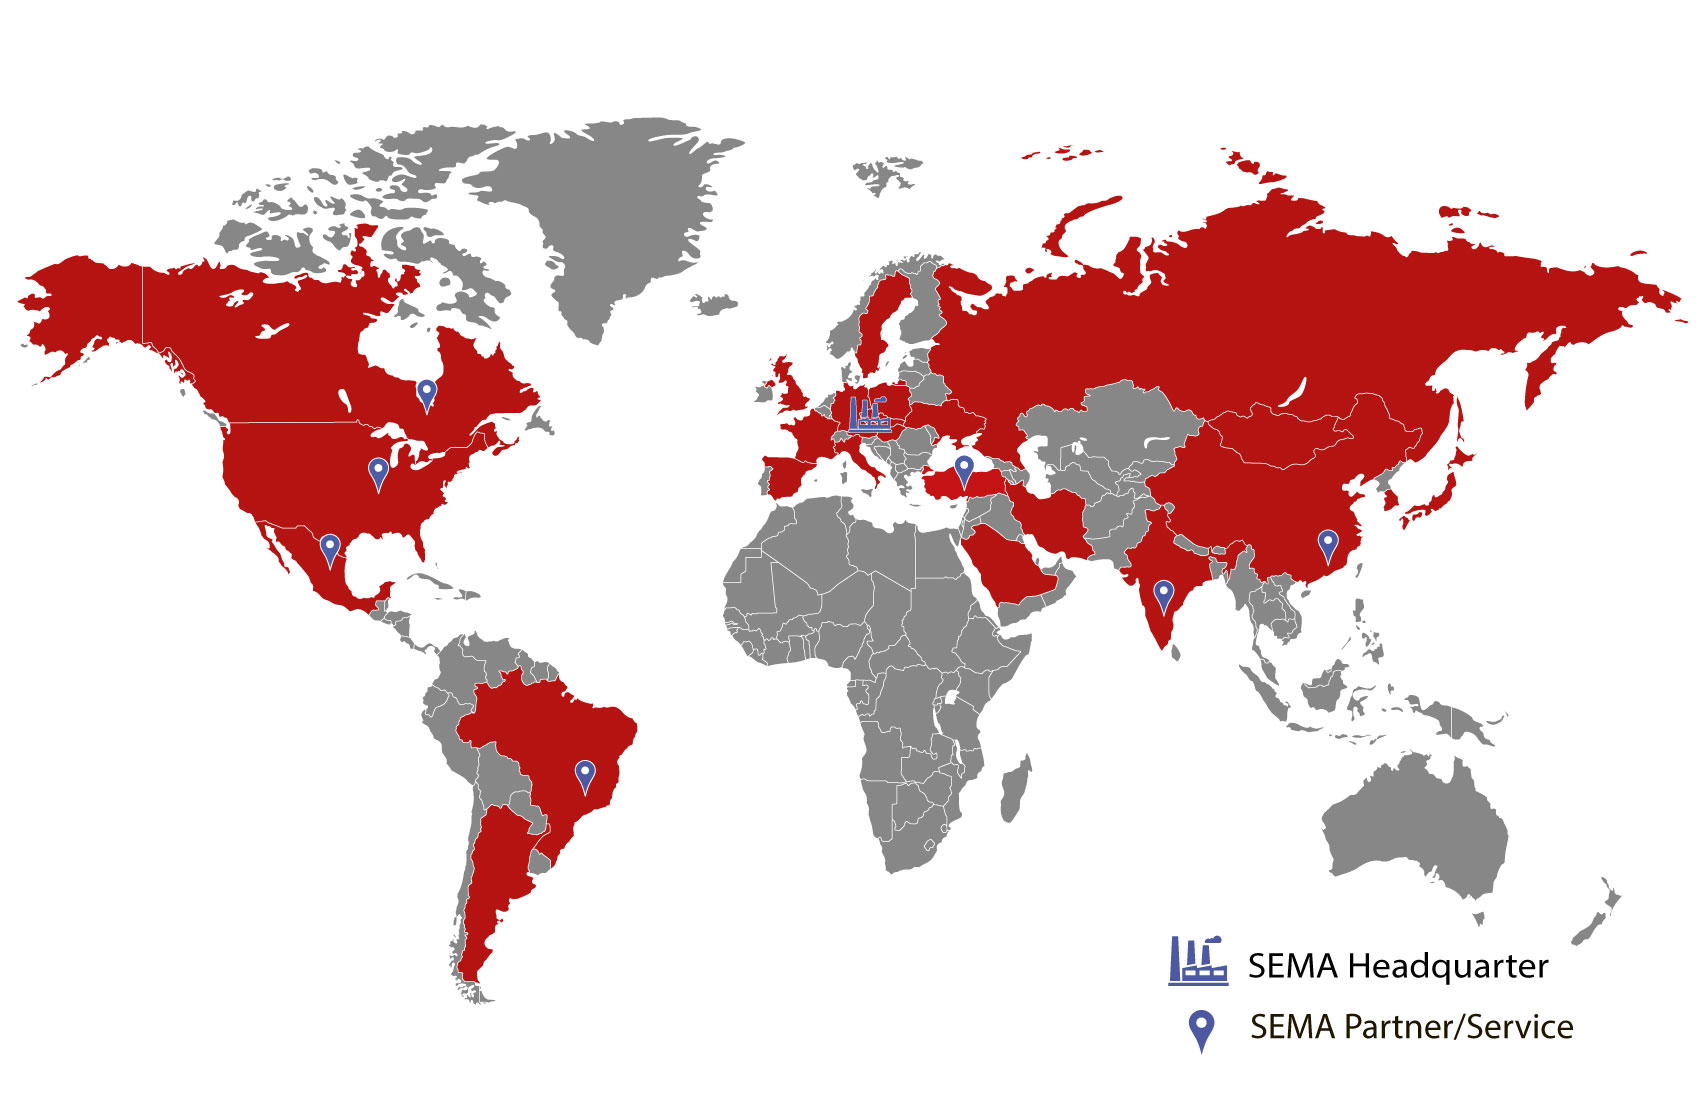   C-SYS - SEMA Technology Group. Weltkarte